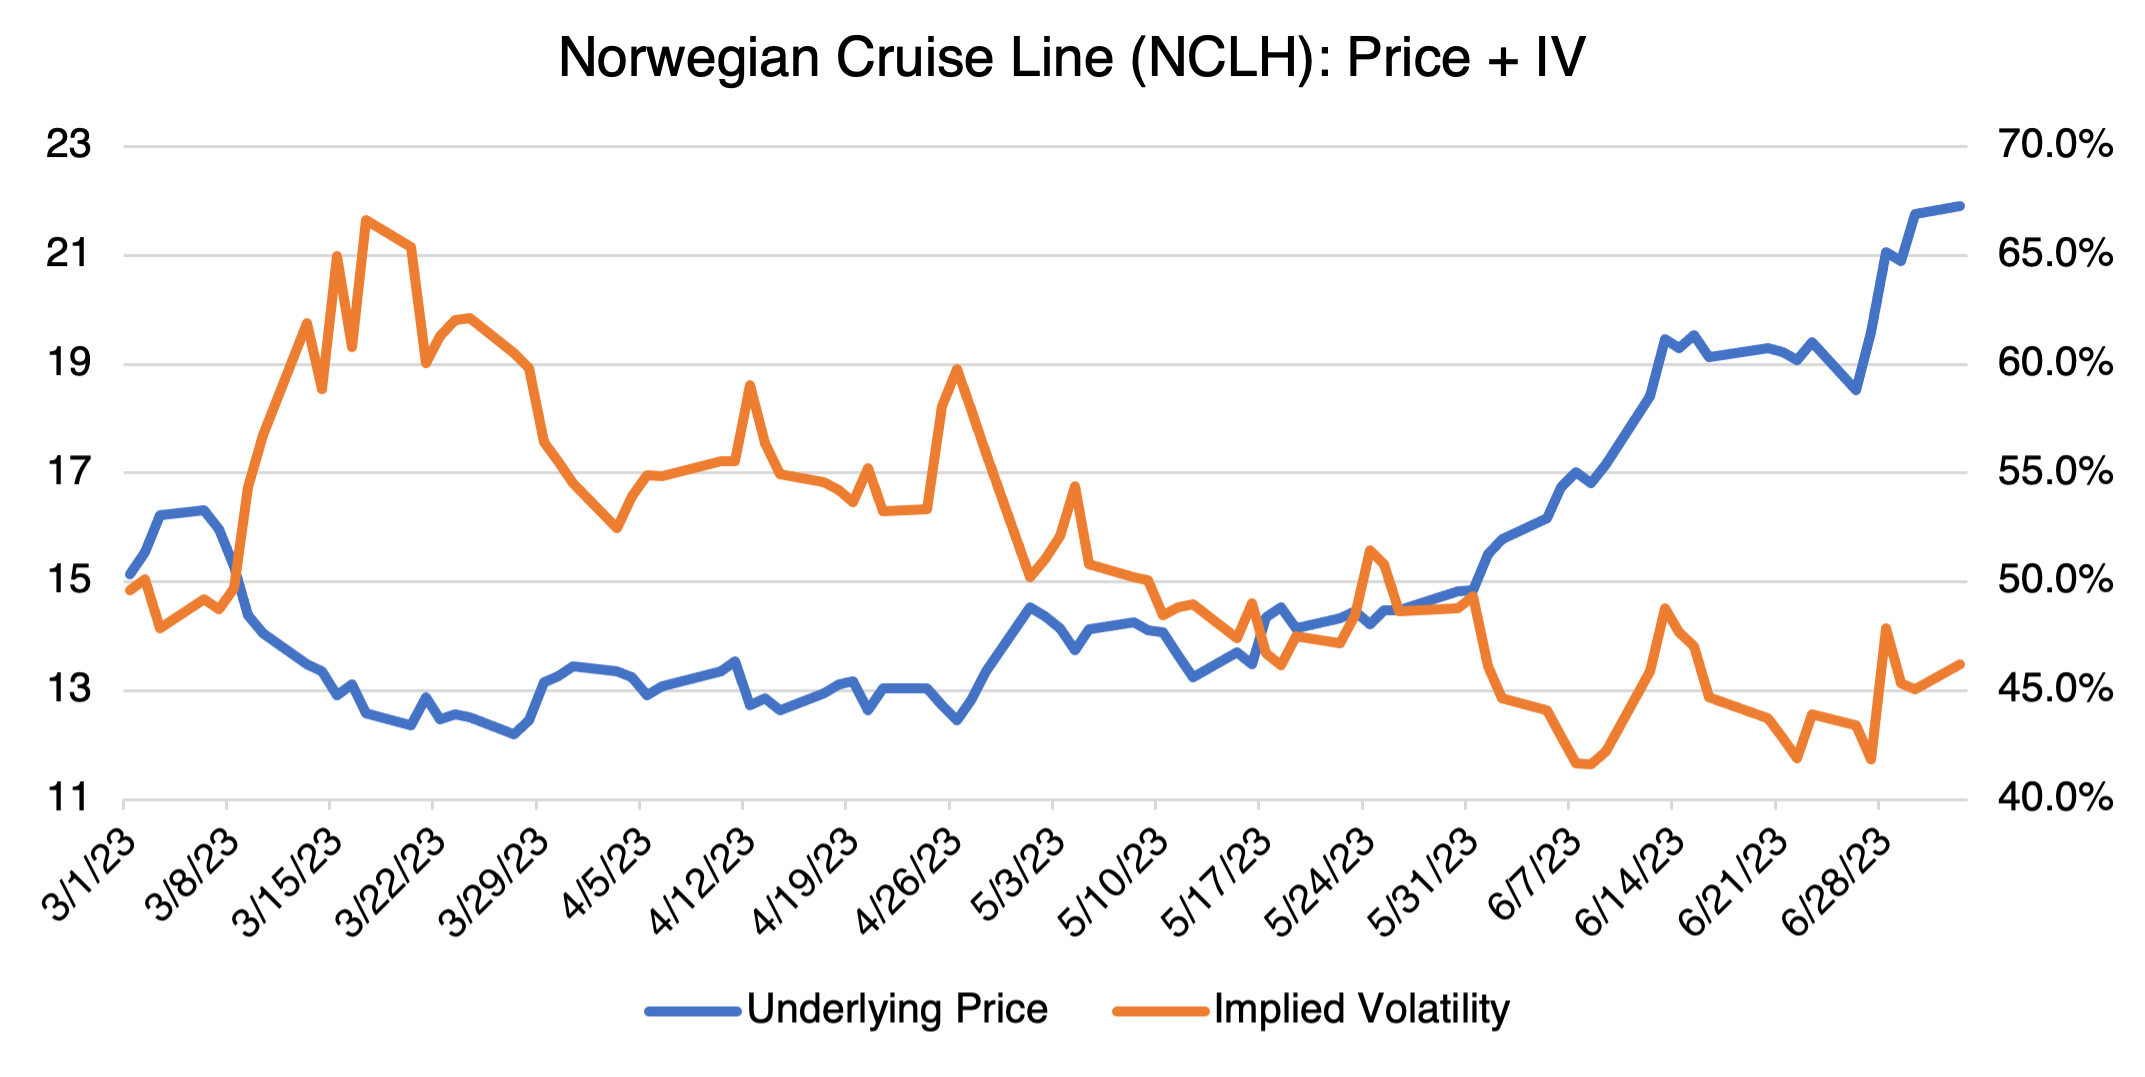 Norwegian Cruise Line (NCLH): Price + IV